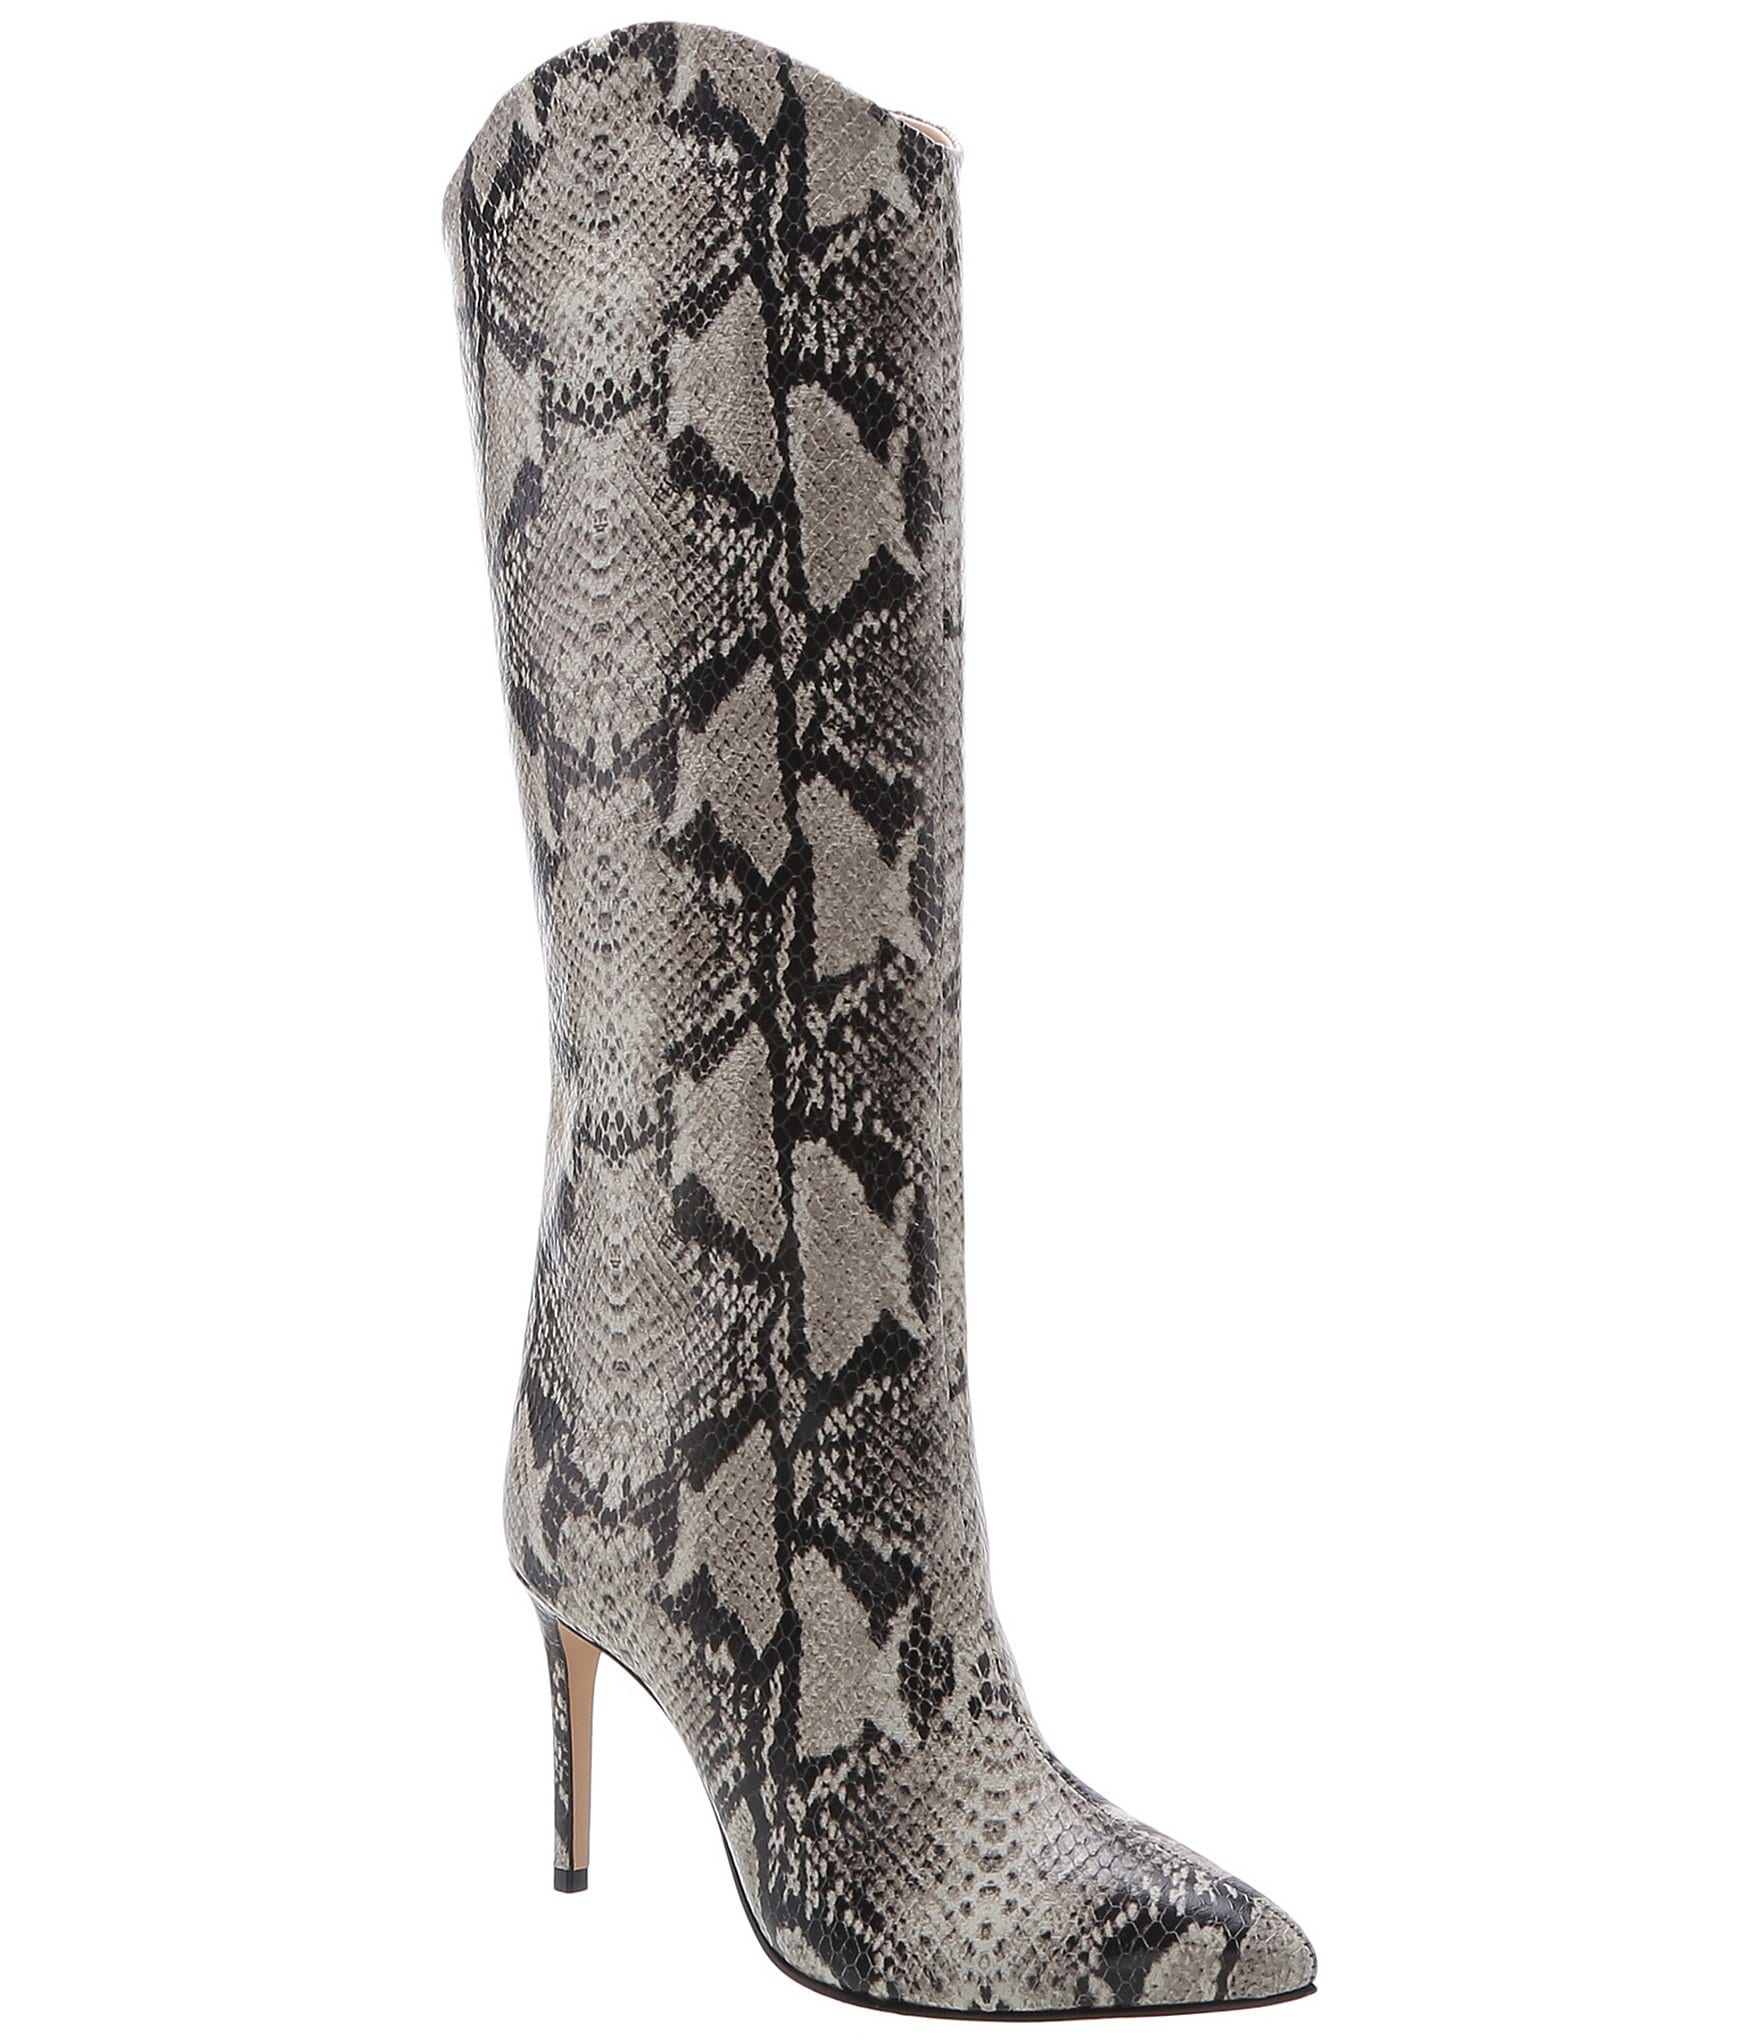 Schutz Maryana Snake Print Leather Tall Western Inspired Boots | Dillard's